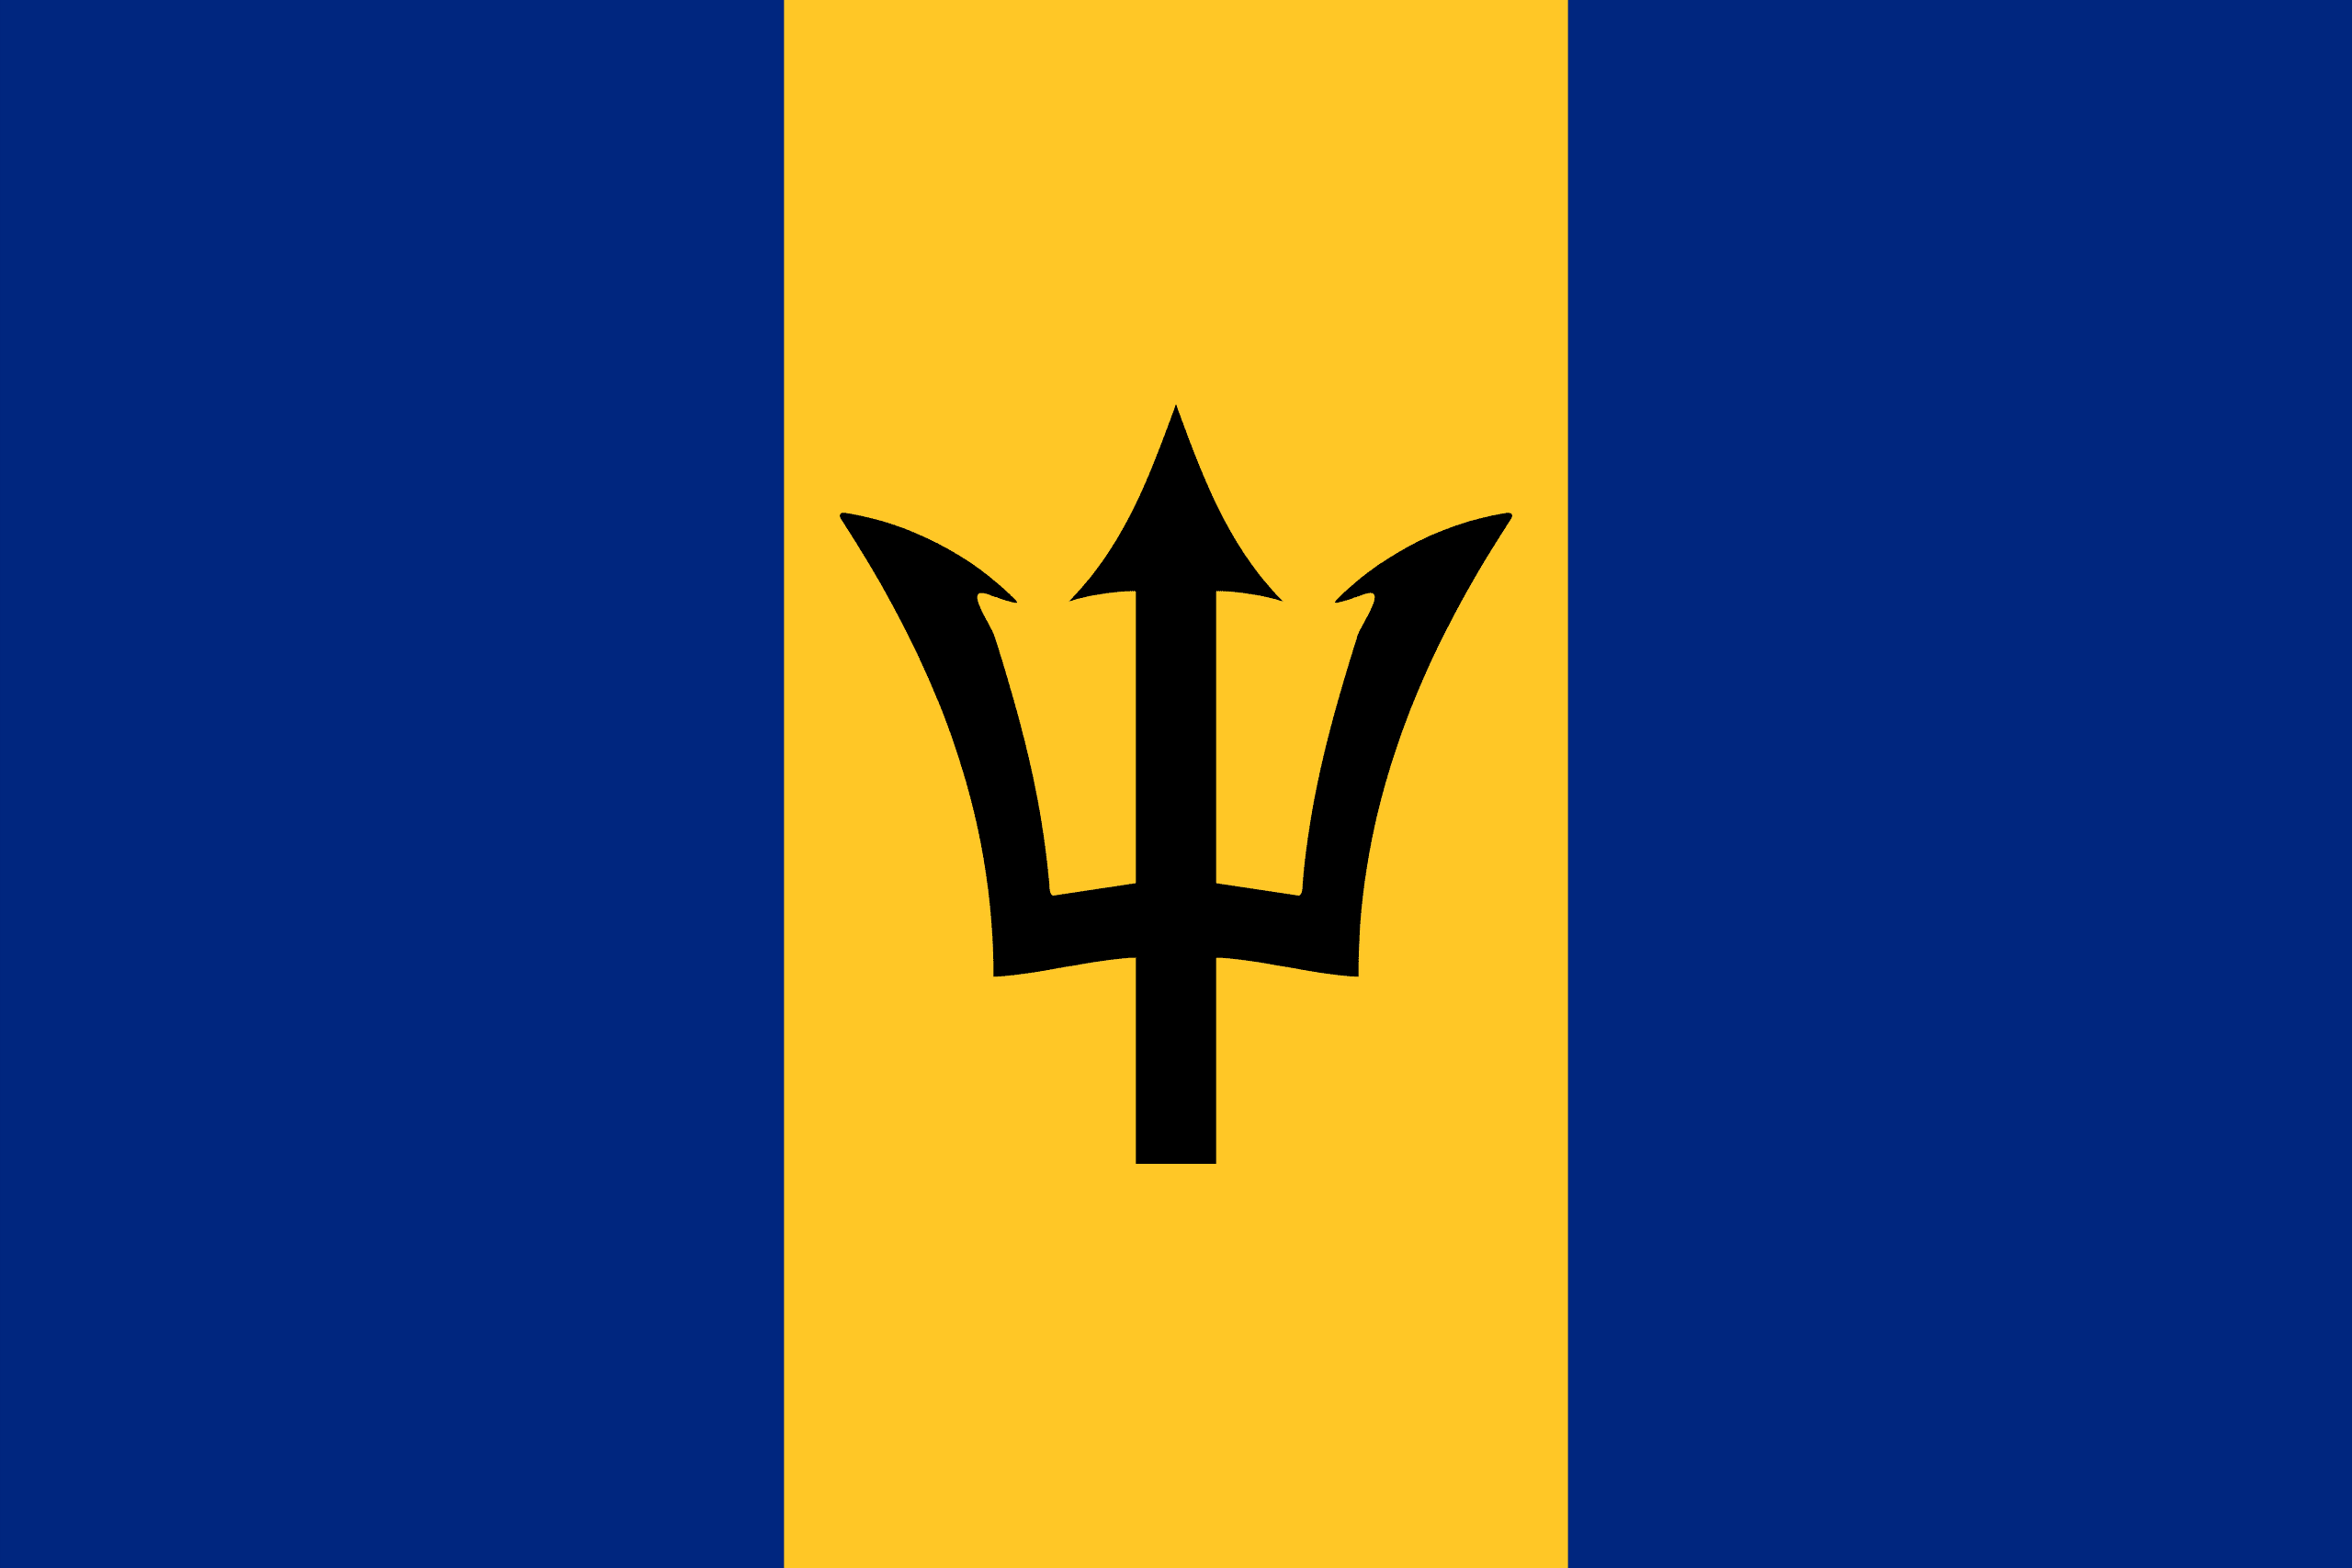 Flag: Barbados